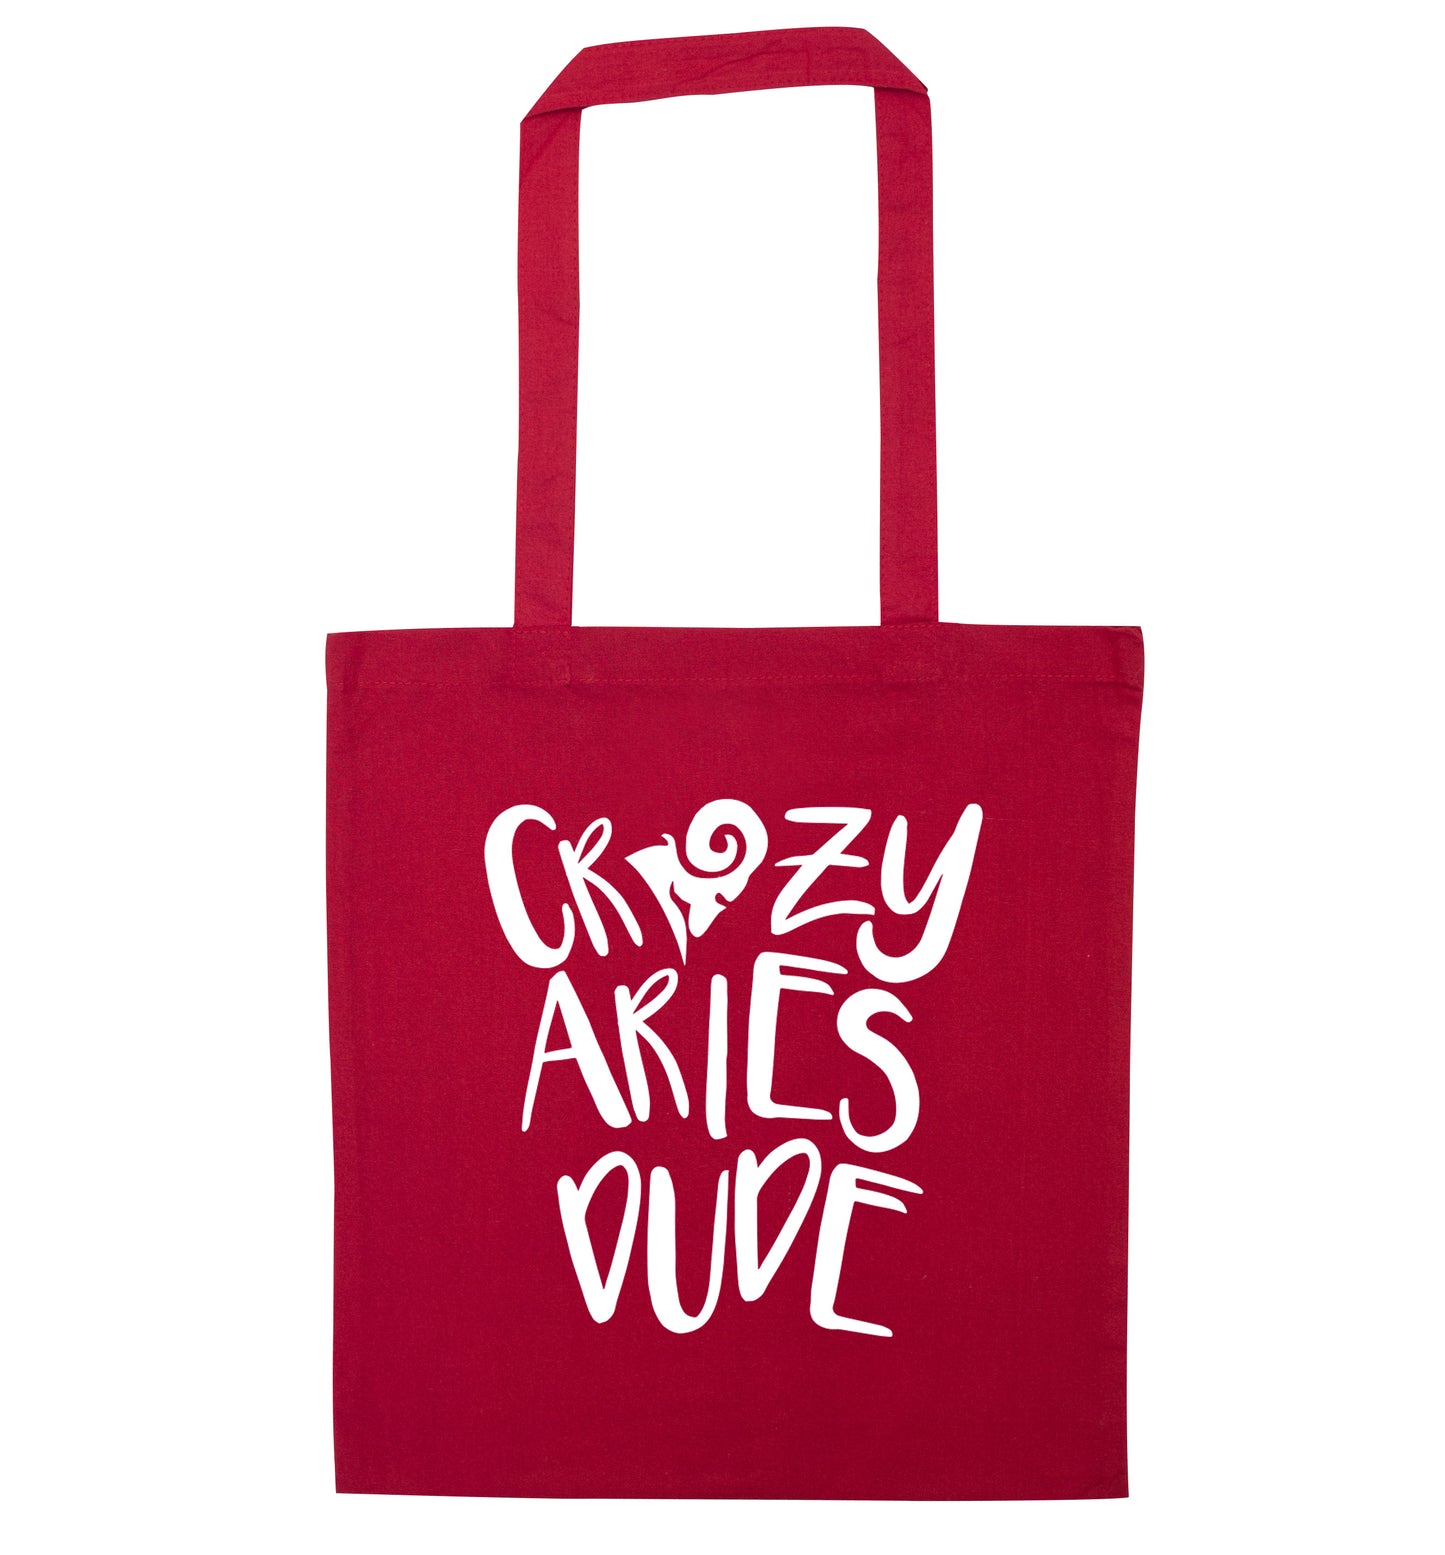 Crazy aries dude red tote bag